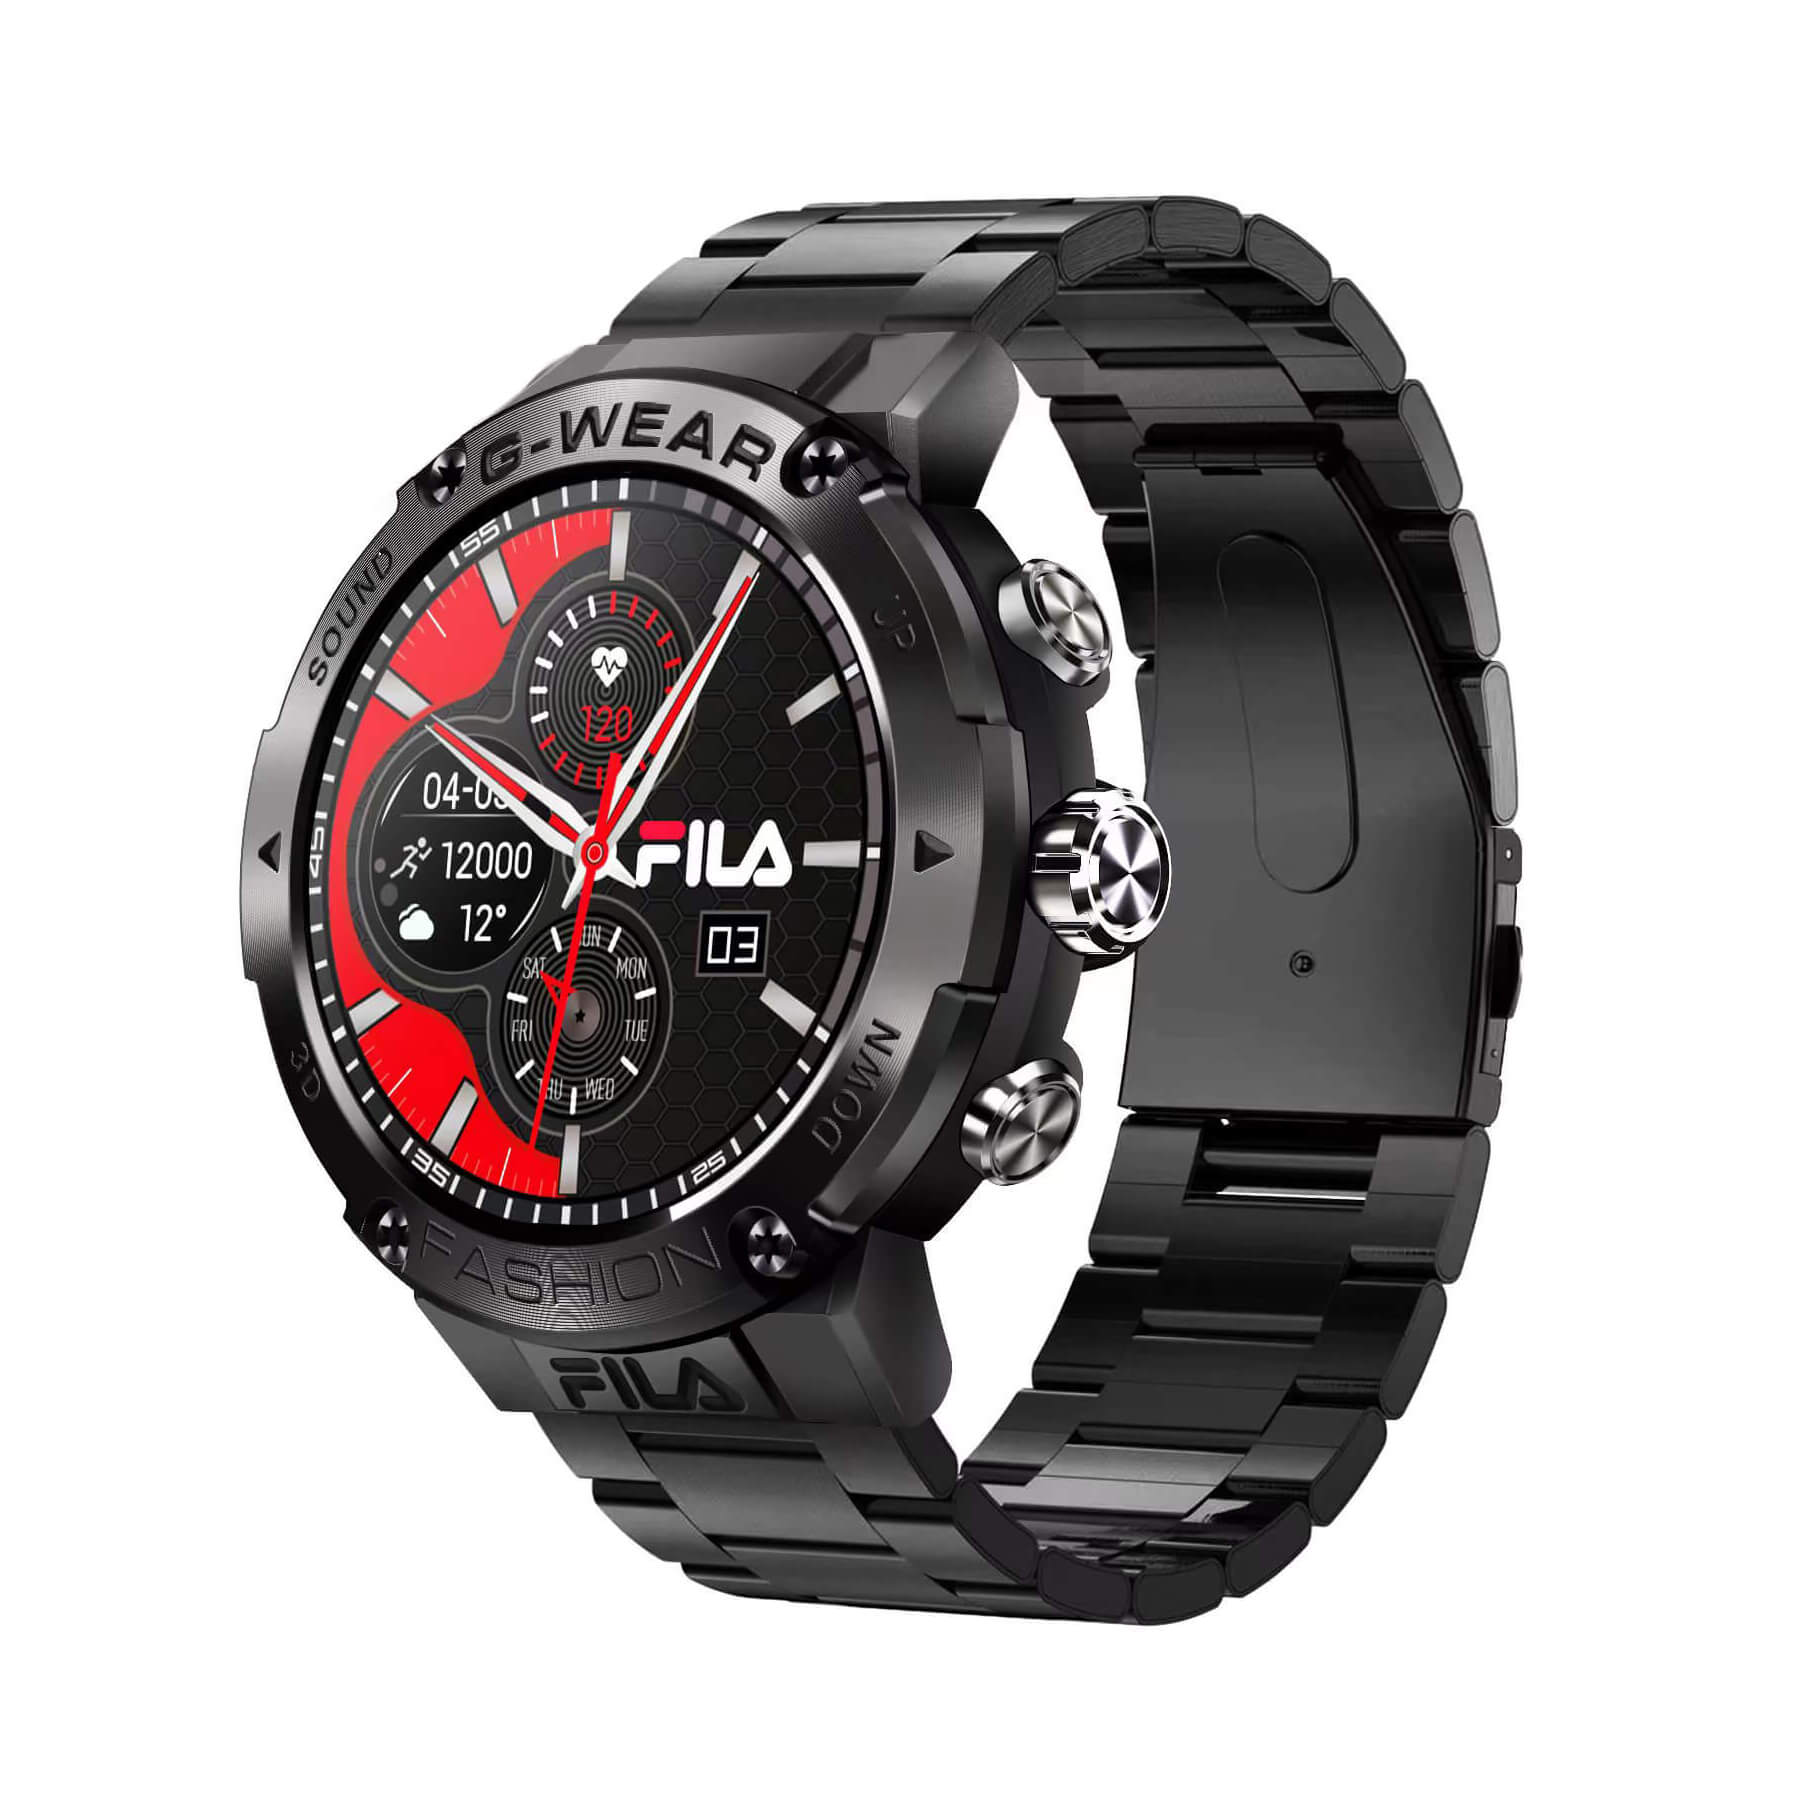 FILA Apex Smart Watch